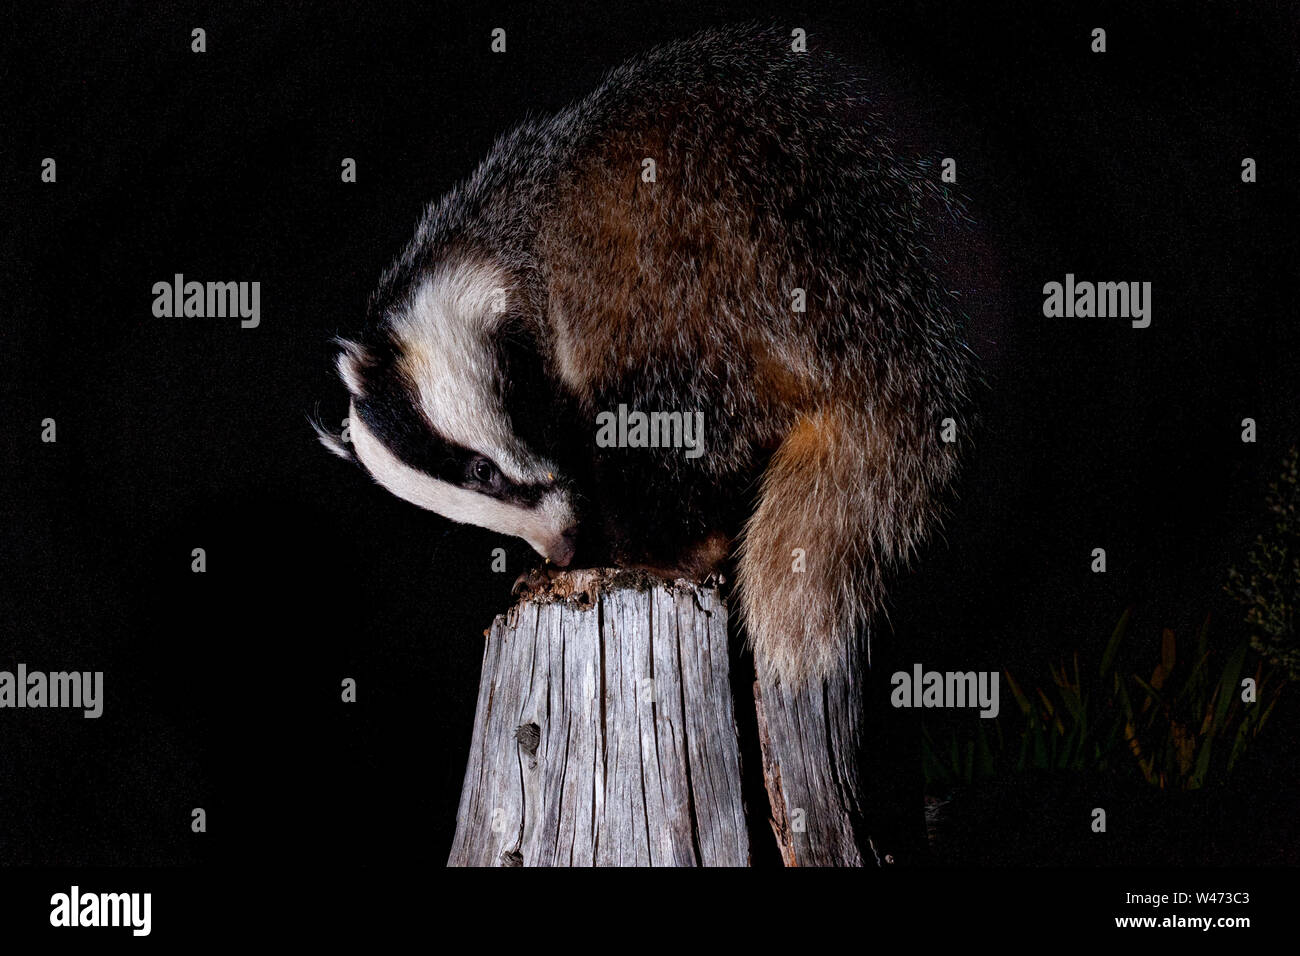 Badger on a log, Applecross, Scotland, UK Stock Photo